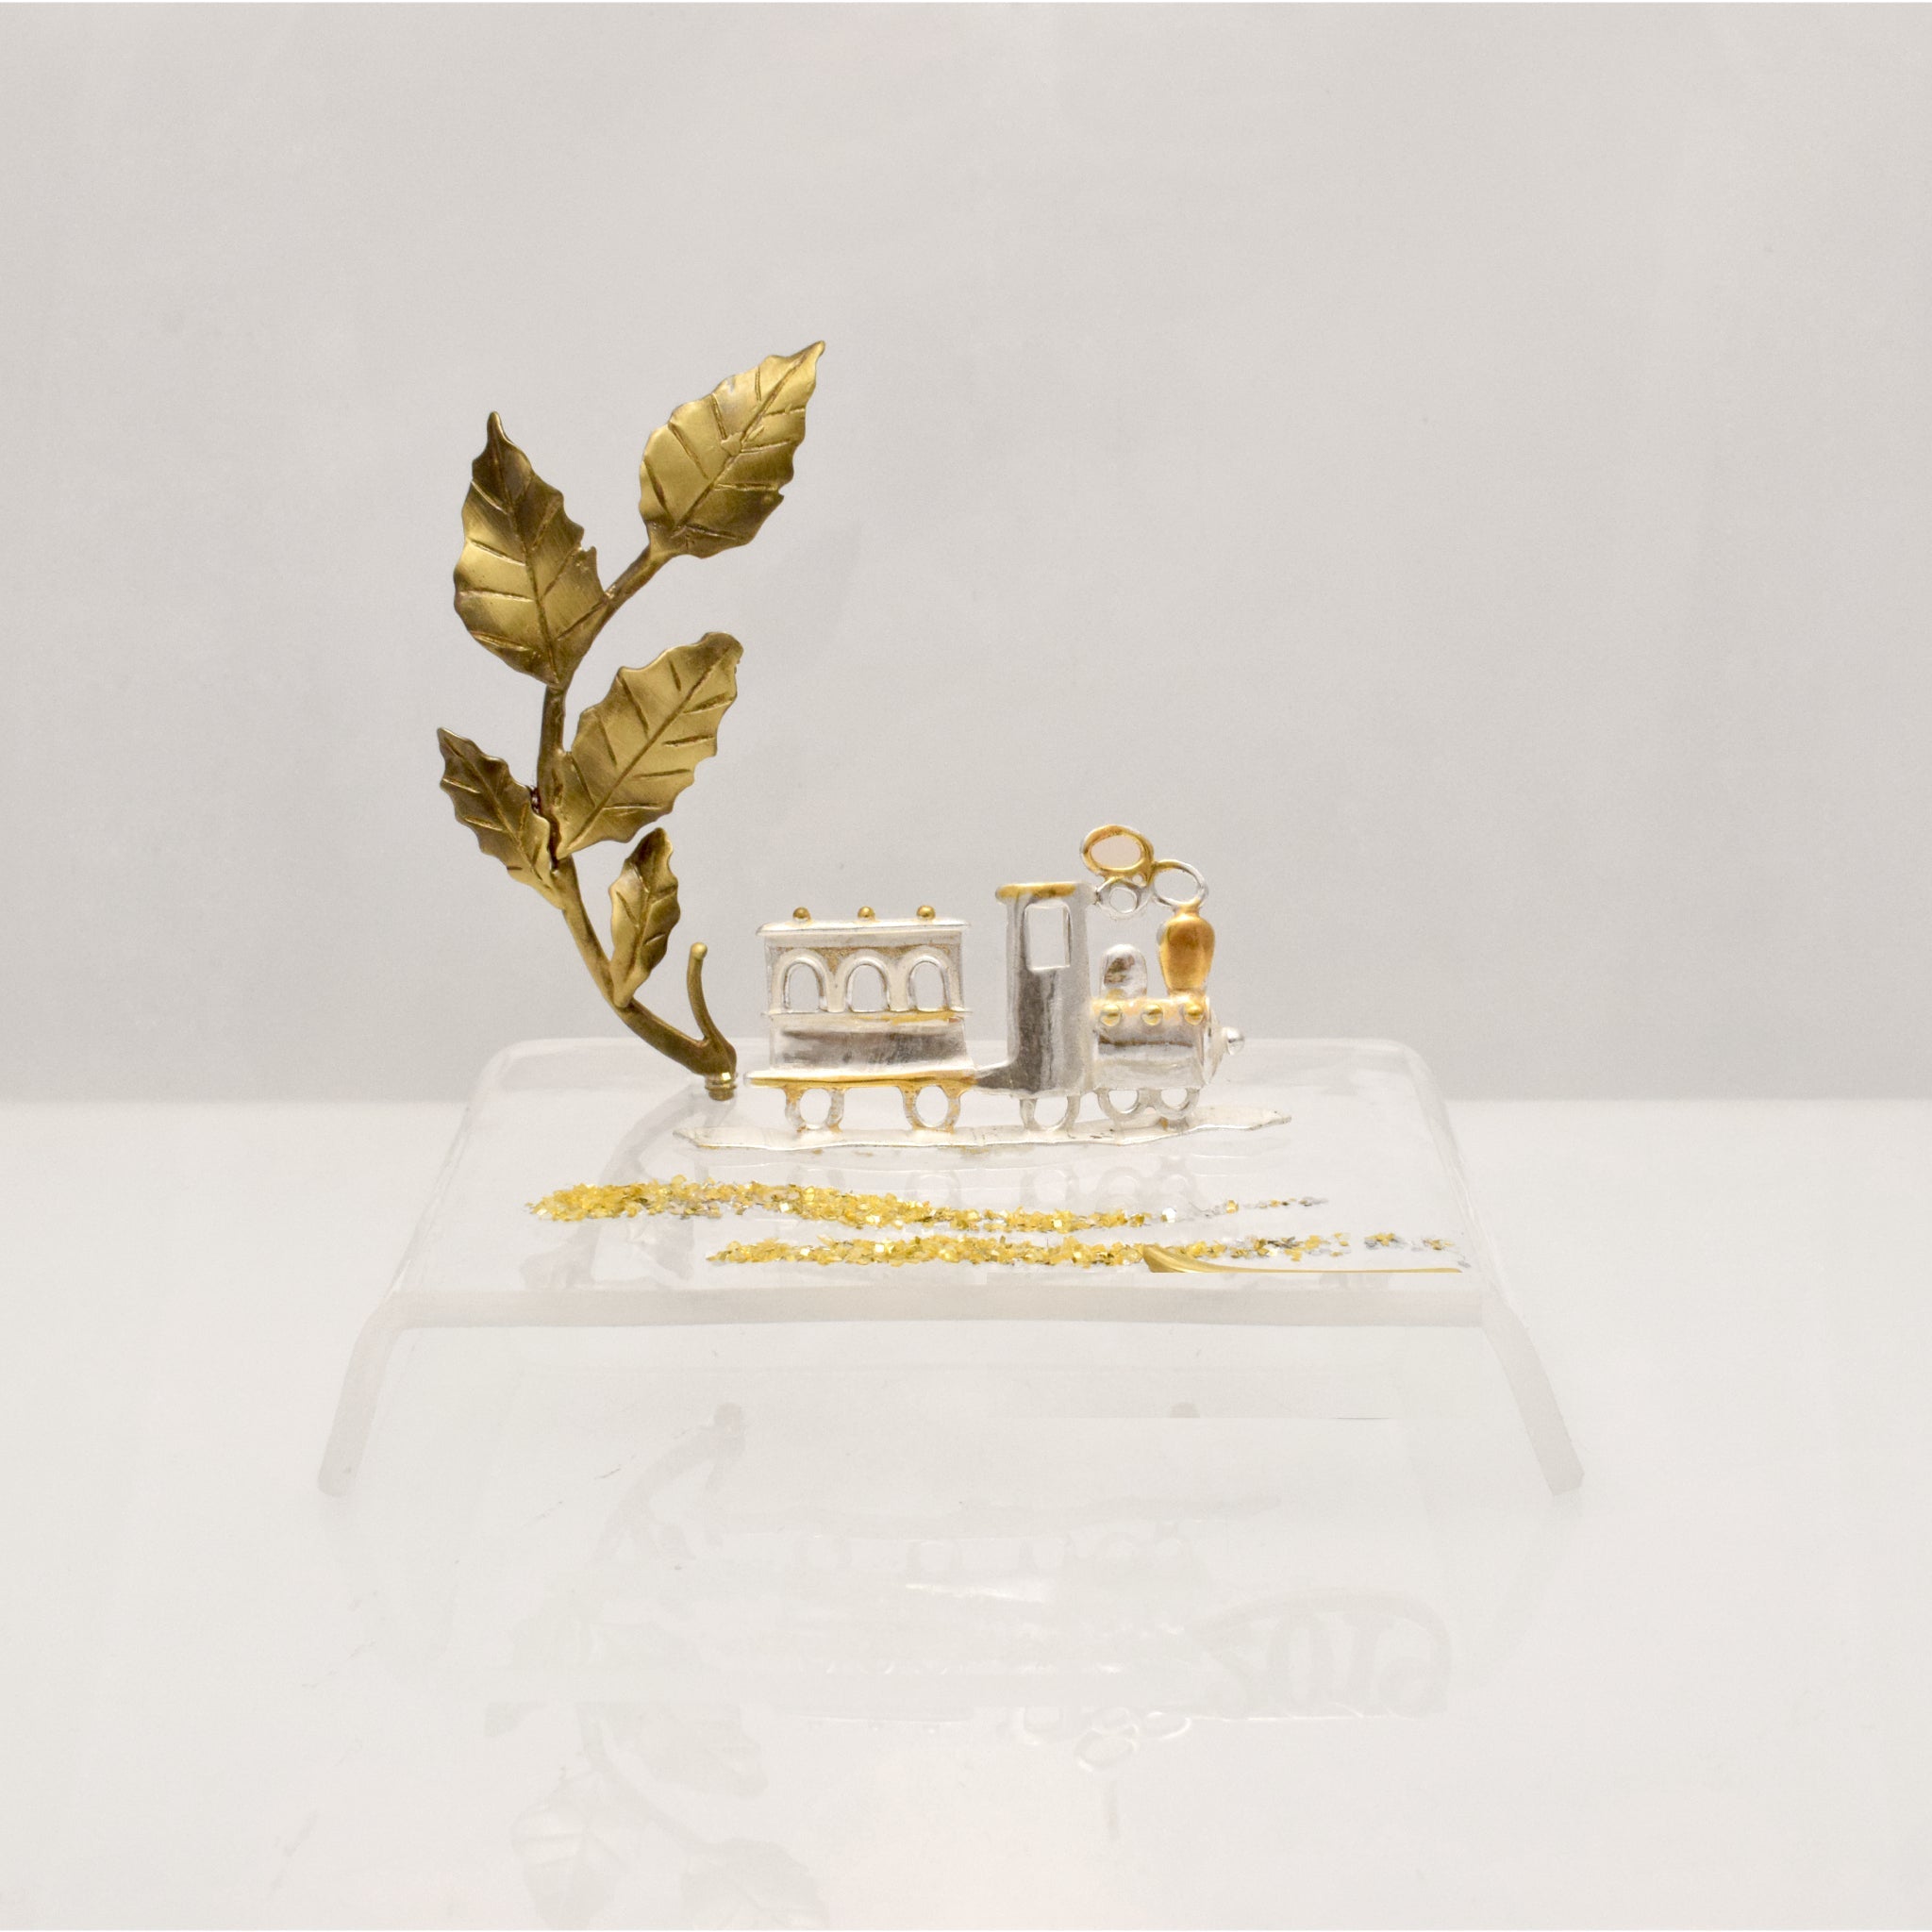 Miniature Train Charm on plexiglass, silver charm with bronze leaves, home decor, gift idea, christening favor (PX-11) - ELEFTHERIOU EL